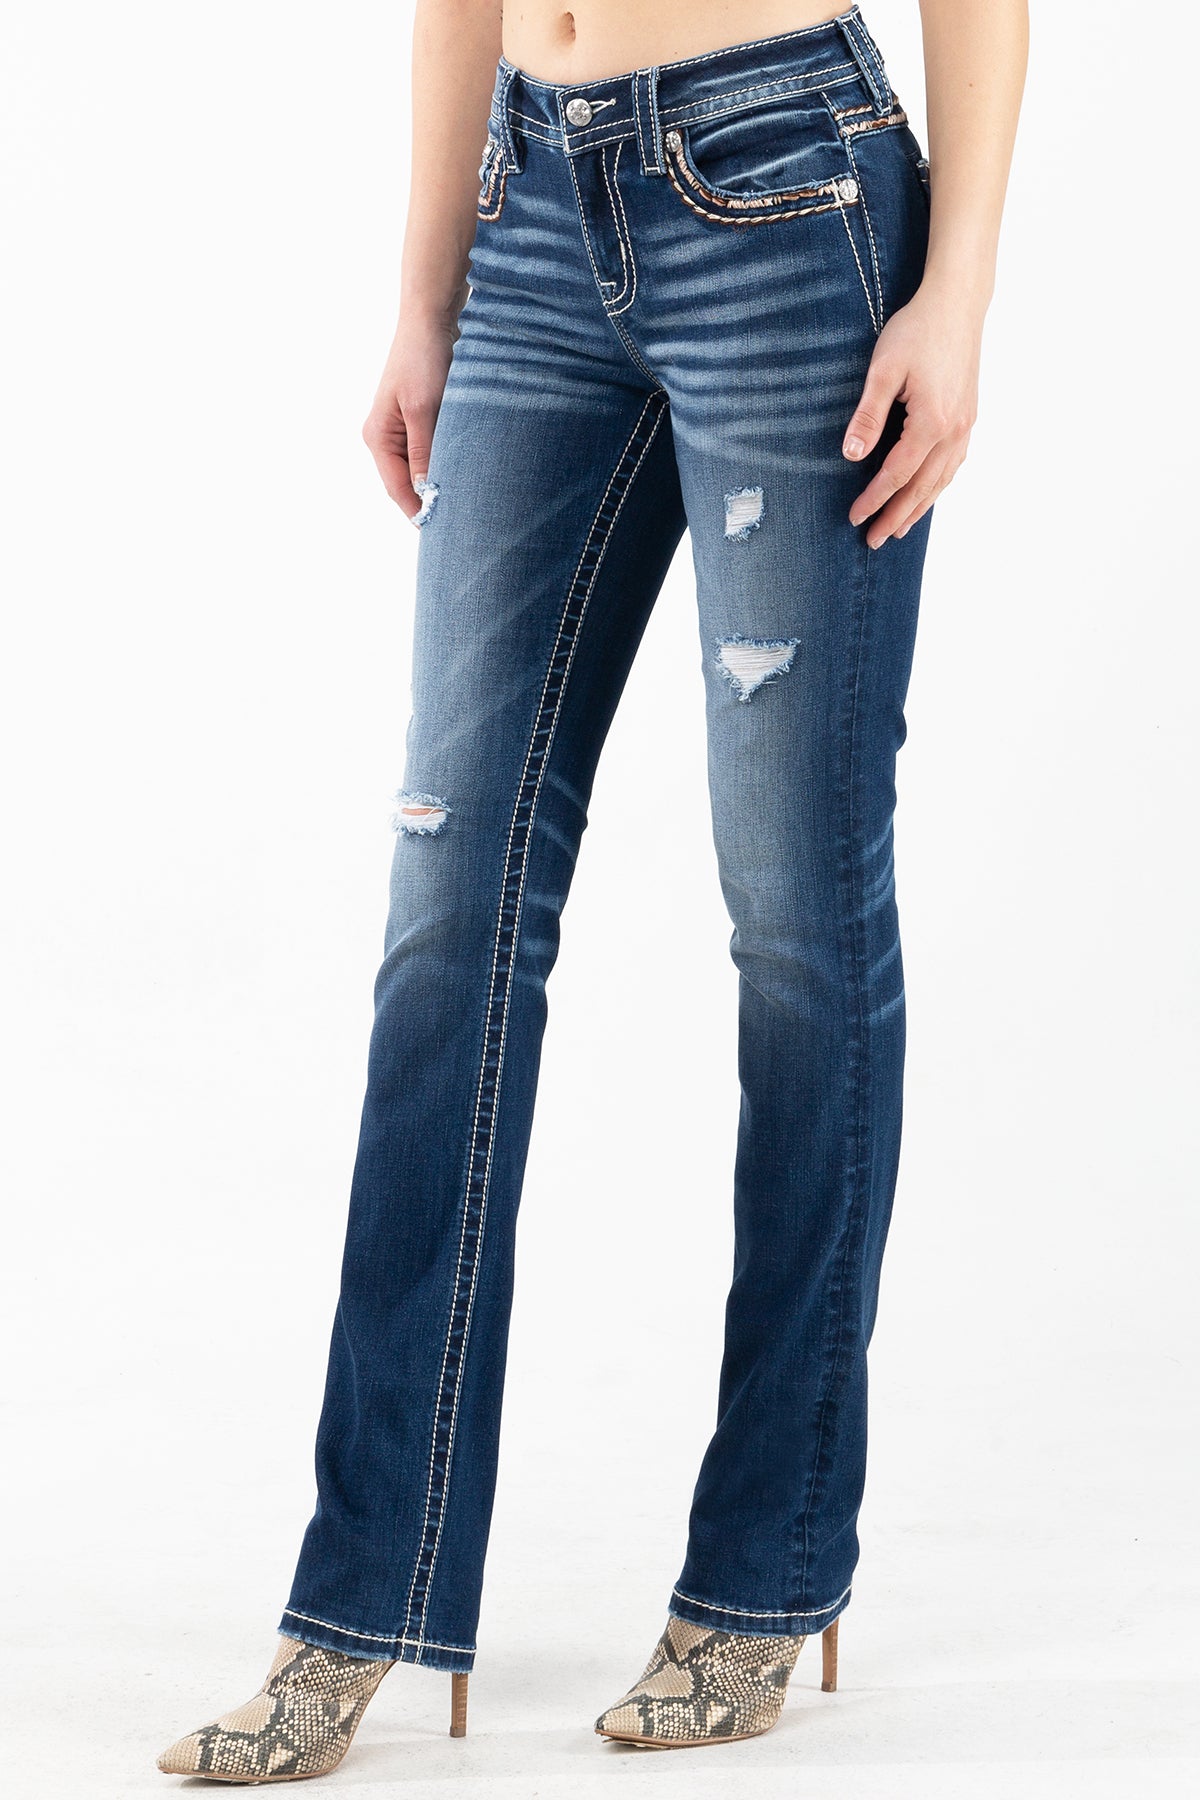 K1262 Mid-Rise Jeans